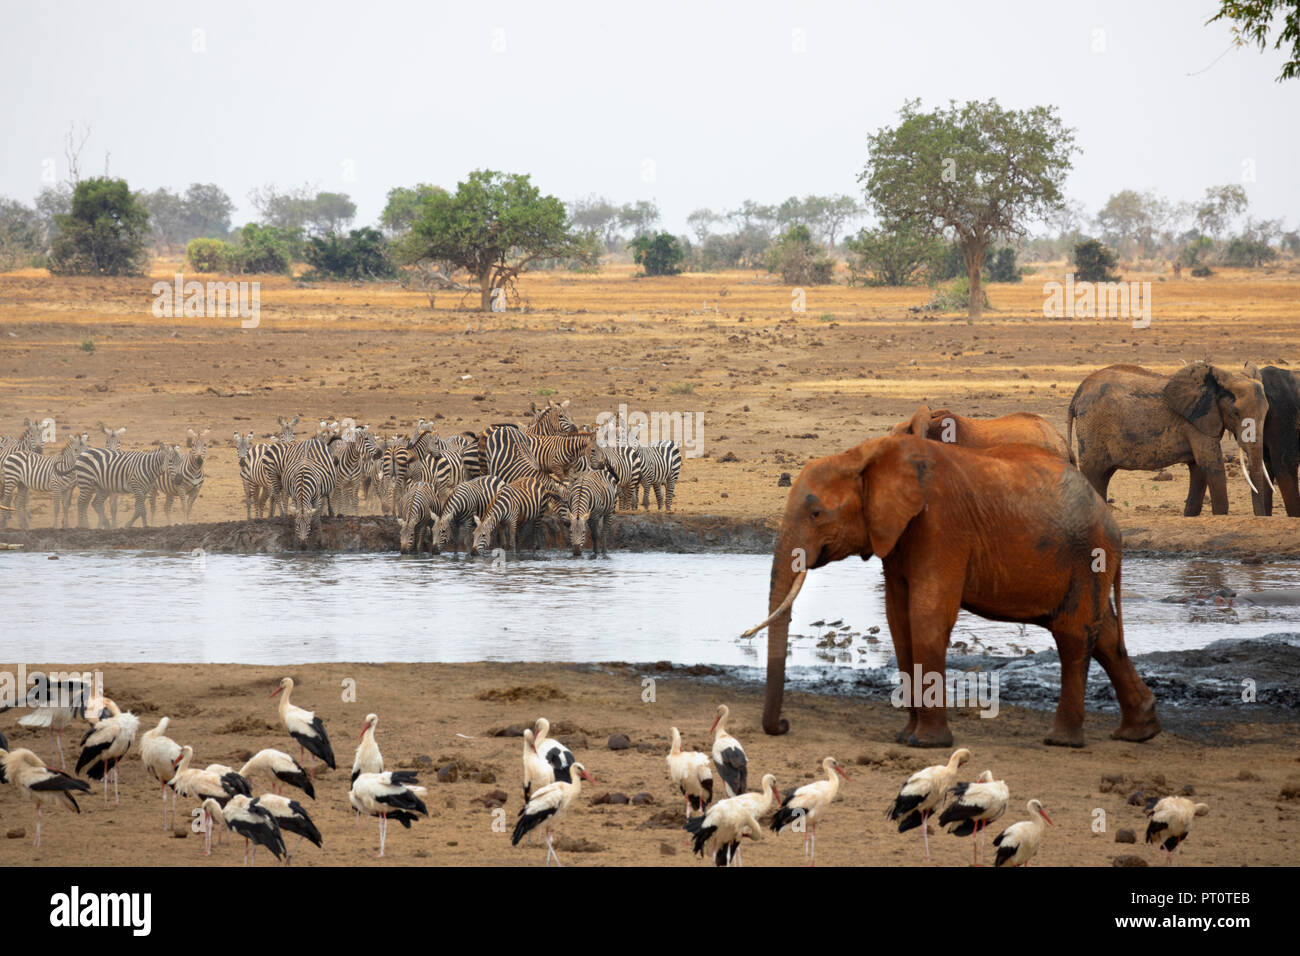 Parco nazionale orientale di tsavo, Kenya, Africa: un branco di elefanti africani e Zebra in corrispondenza di un foro di irrigazione sulla savana secca in afternoo Foto Stock